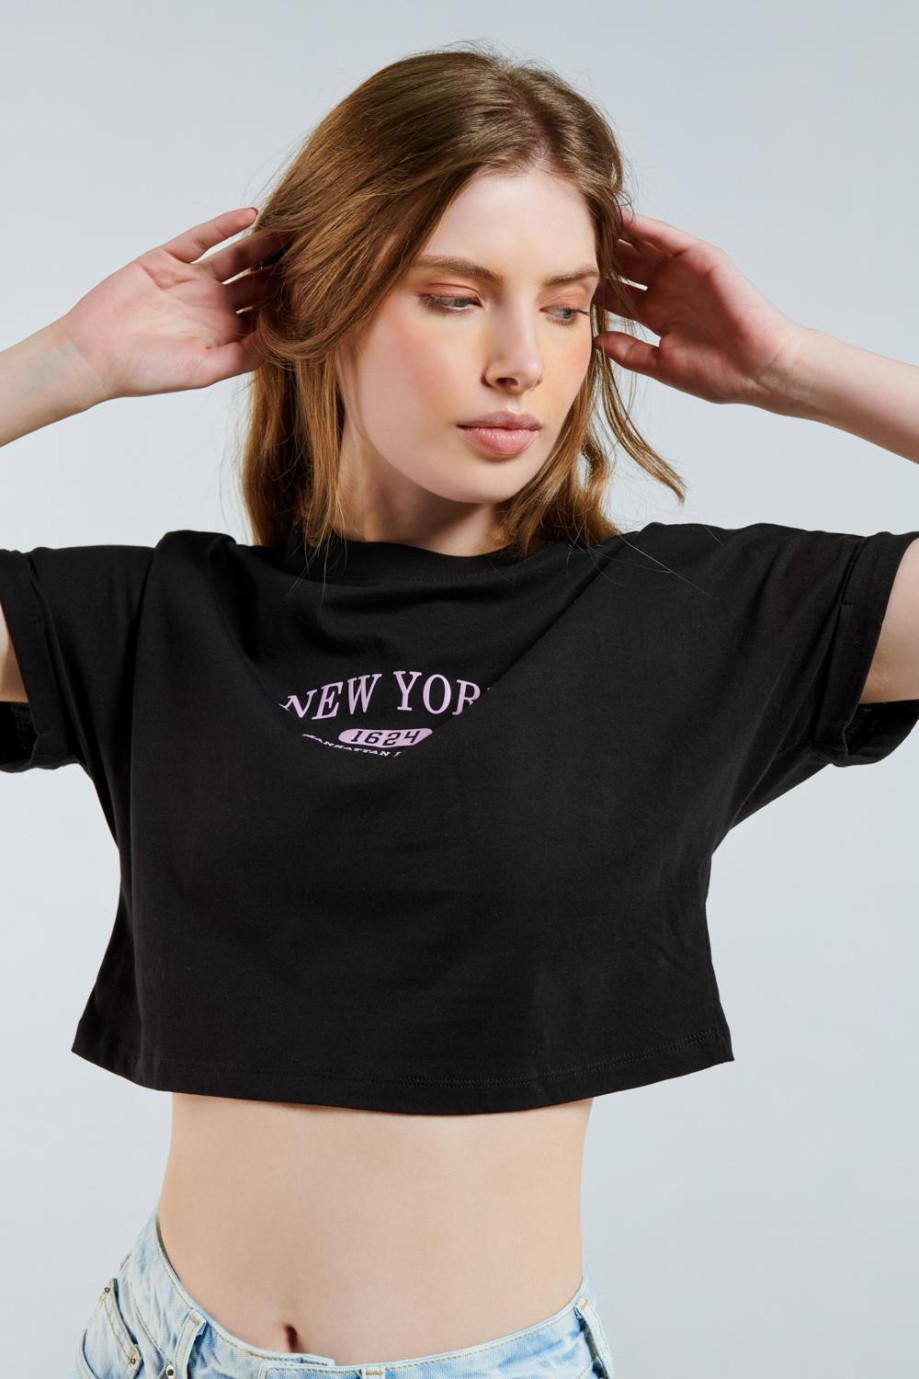 Camiseta crop top negra con diseño college de New York